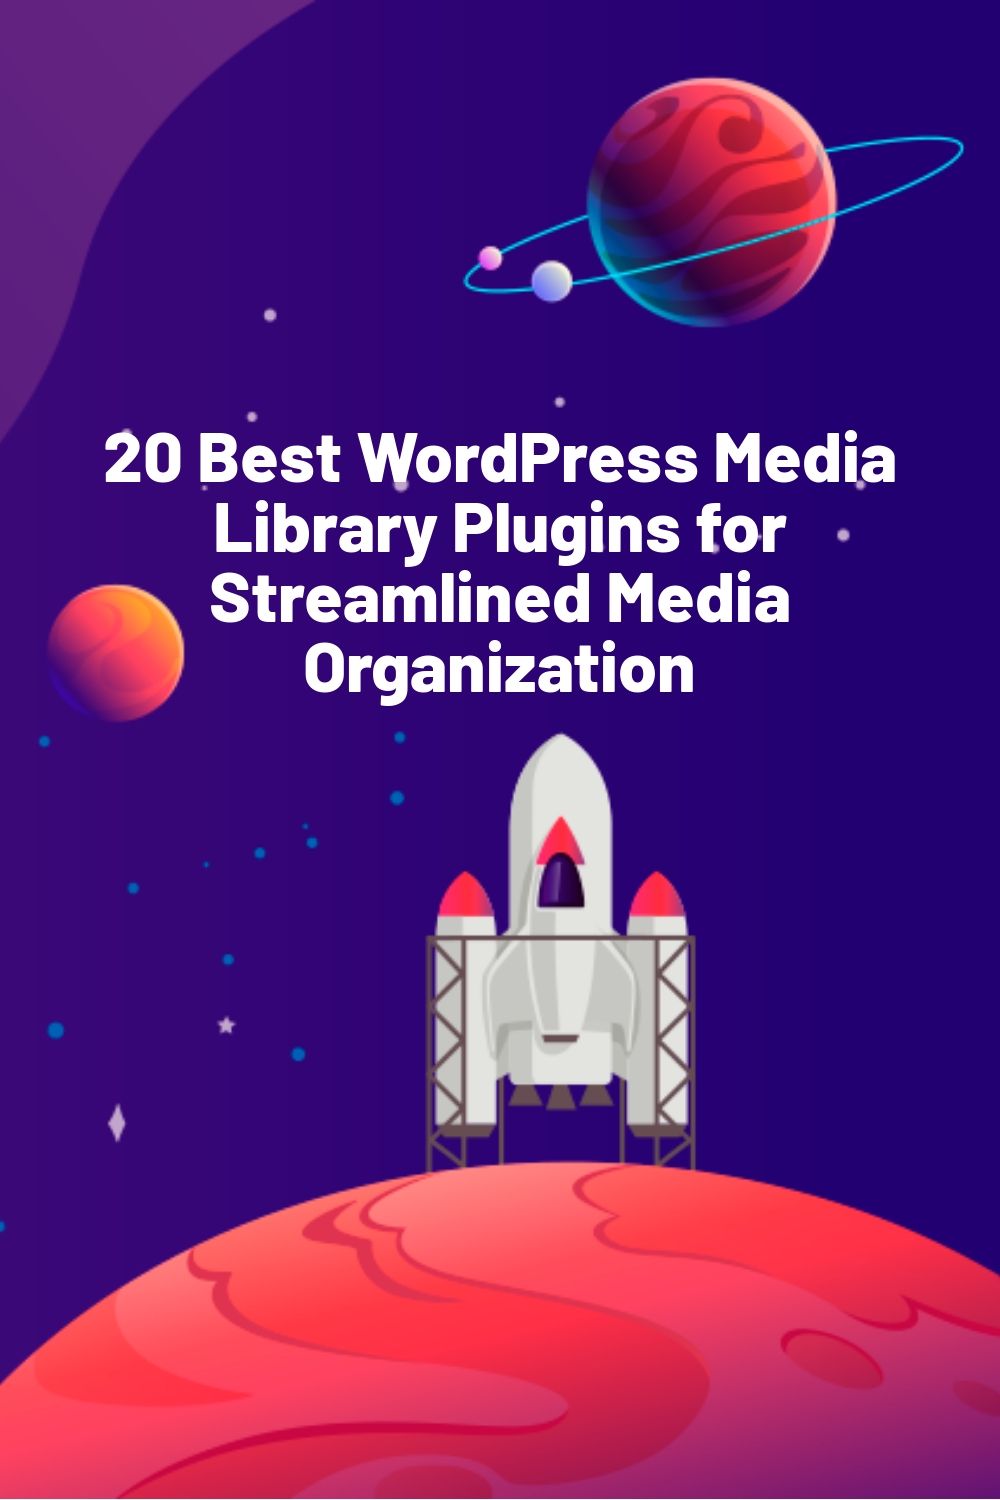 20 Best WordPress Media Library Plugins for Streamlined Media Organization